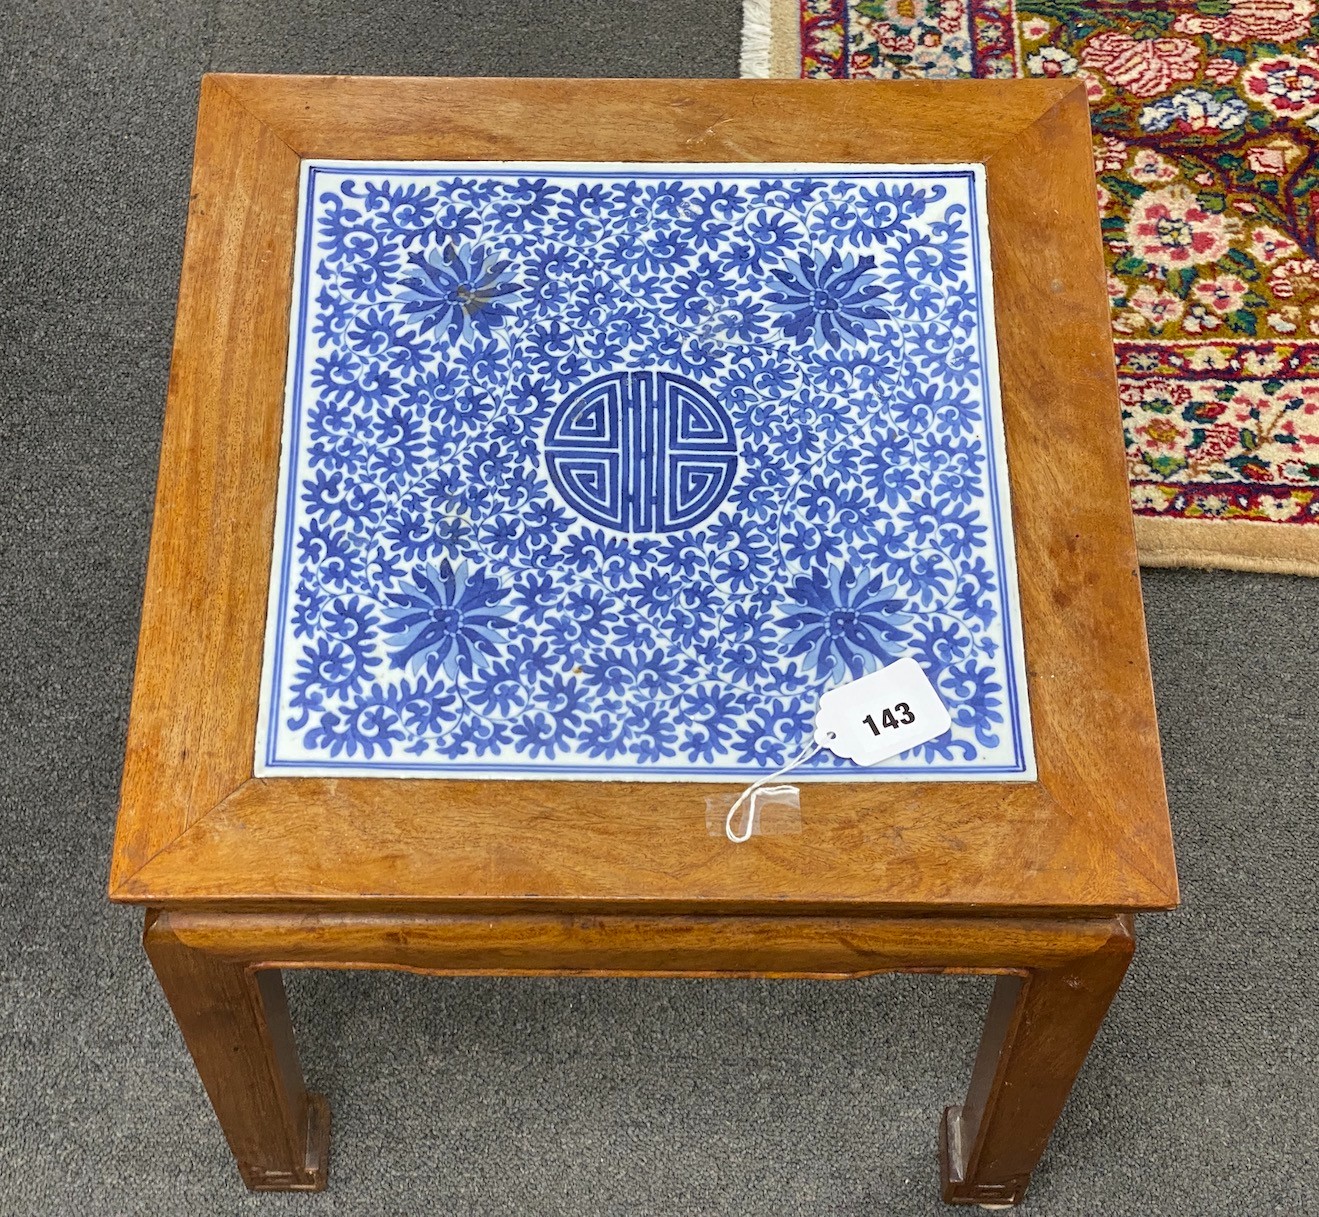 A Chinese hardwood and underglaze blue porcelain tile inset table, width 42cm, depth 42cm, height 43cm